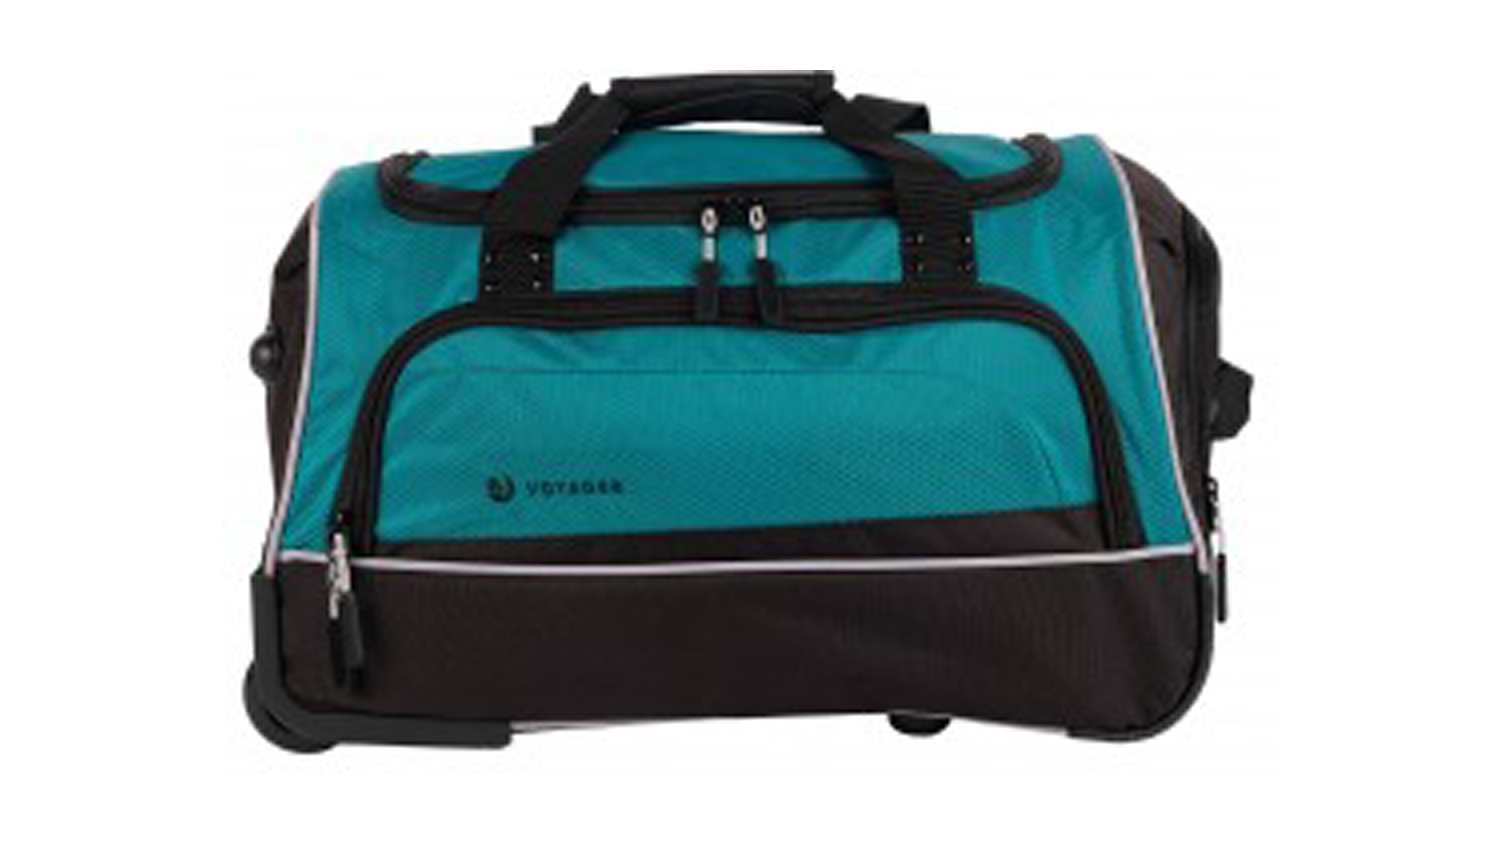 Aerolite (56x45x25cm) Lightweight Cabin Luggage | 2 Wheel Luggage –  Aerolite UK